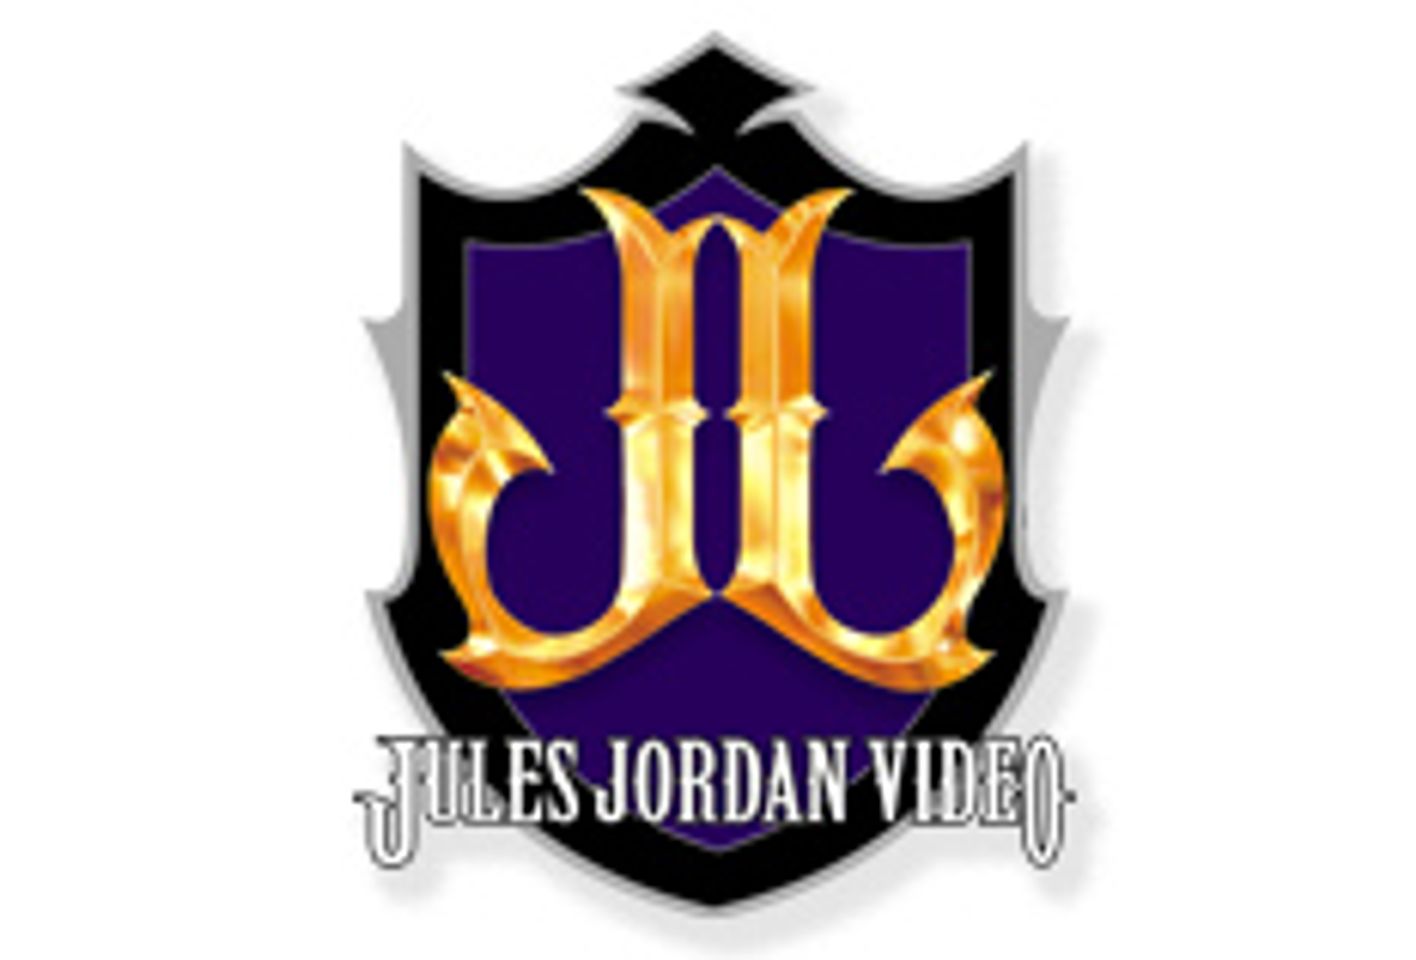 Jules Jordan Video and Associated Companies Score 115 AVN Award Noms